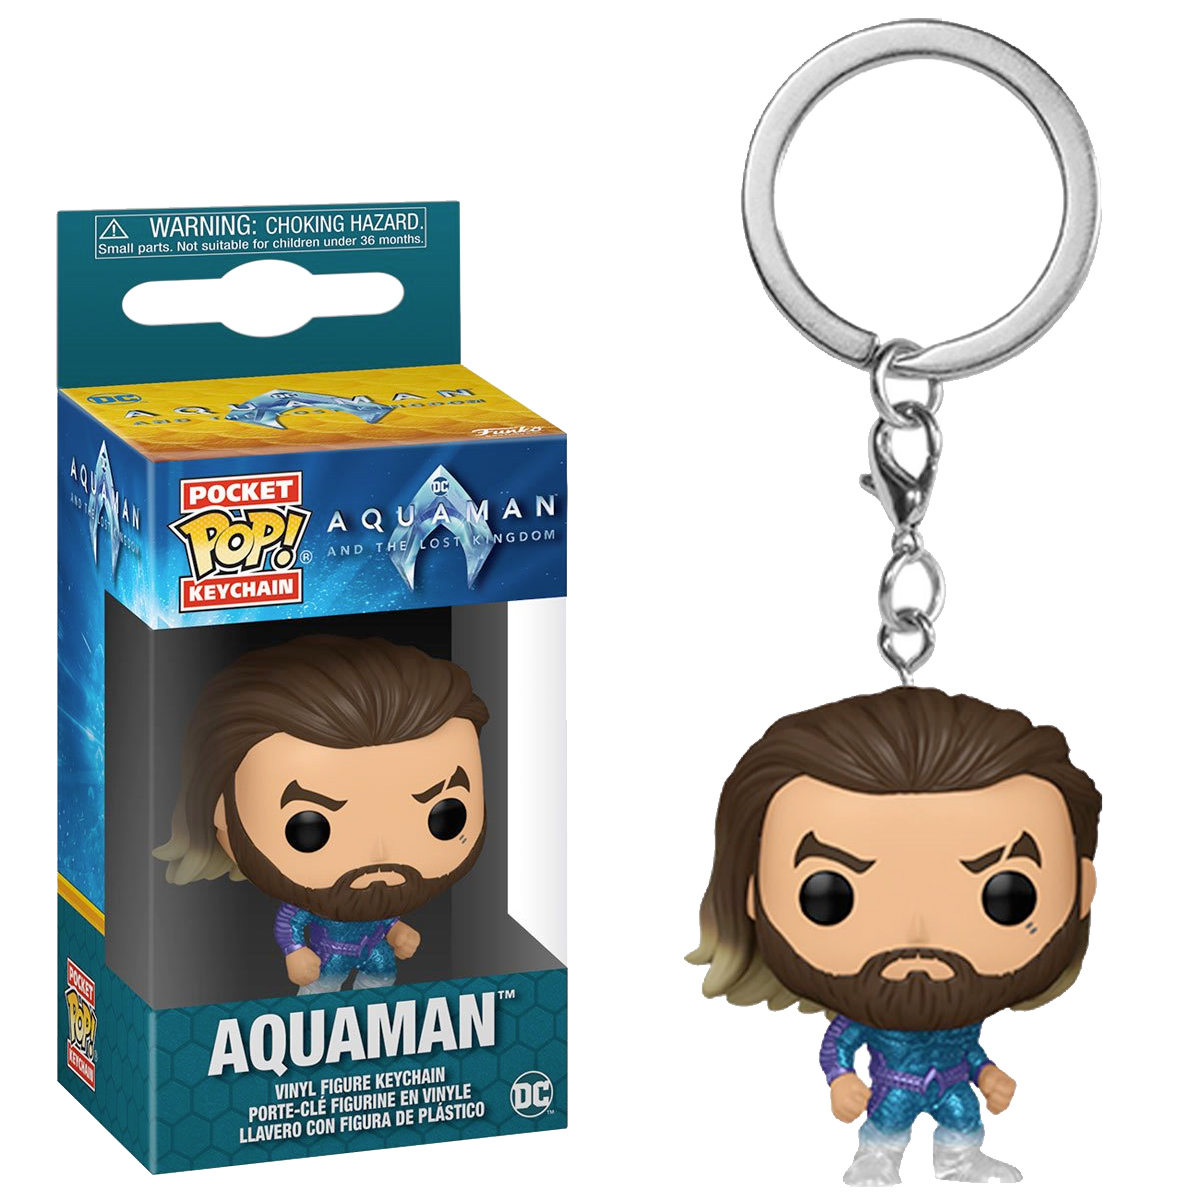 Aquaman 2: The Lost Kingdom Funko Pocket Pop Keychains!